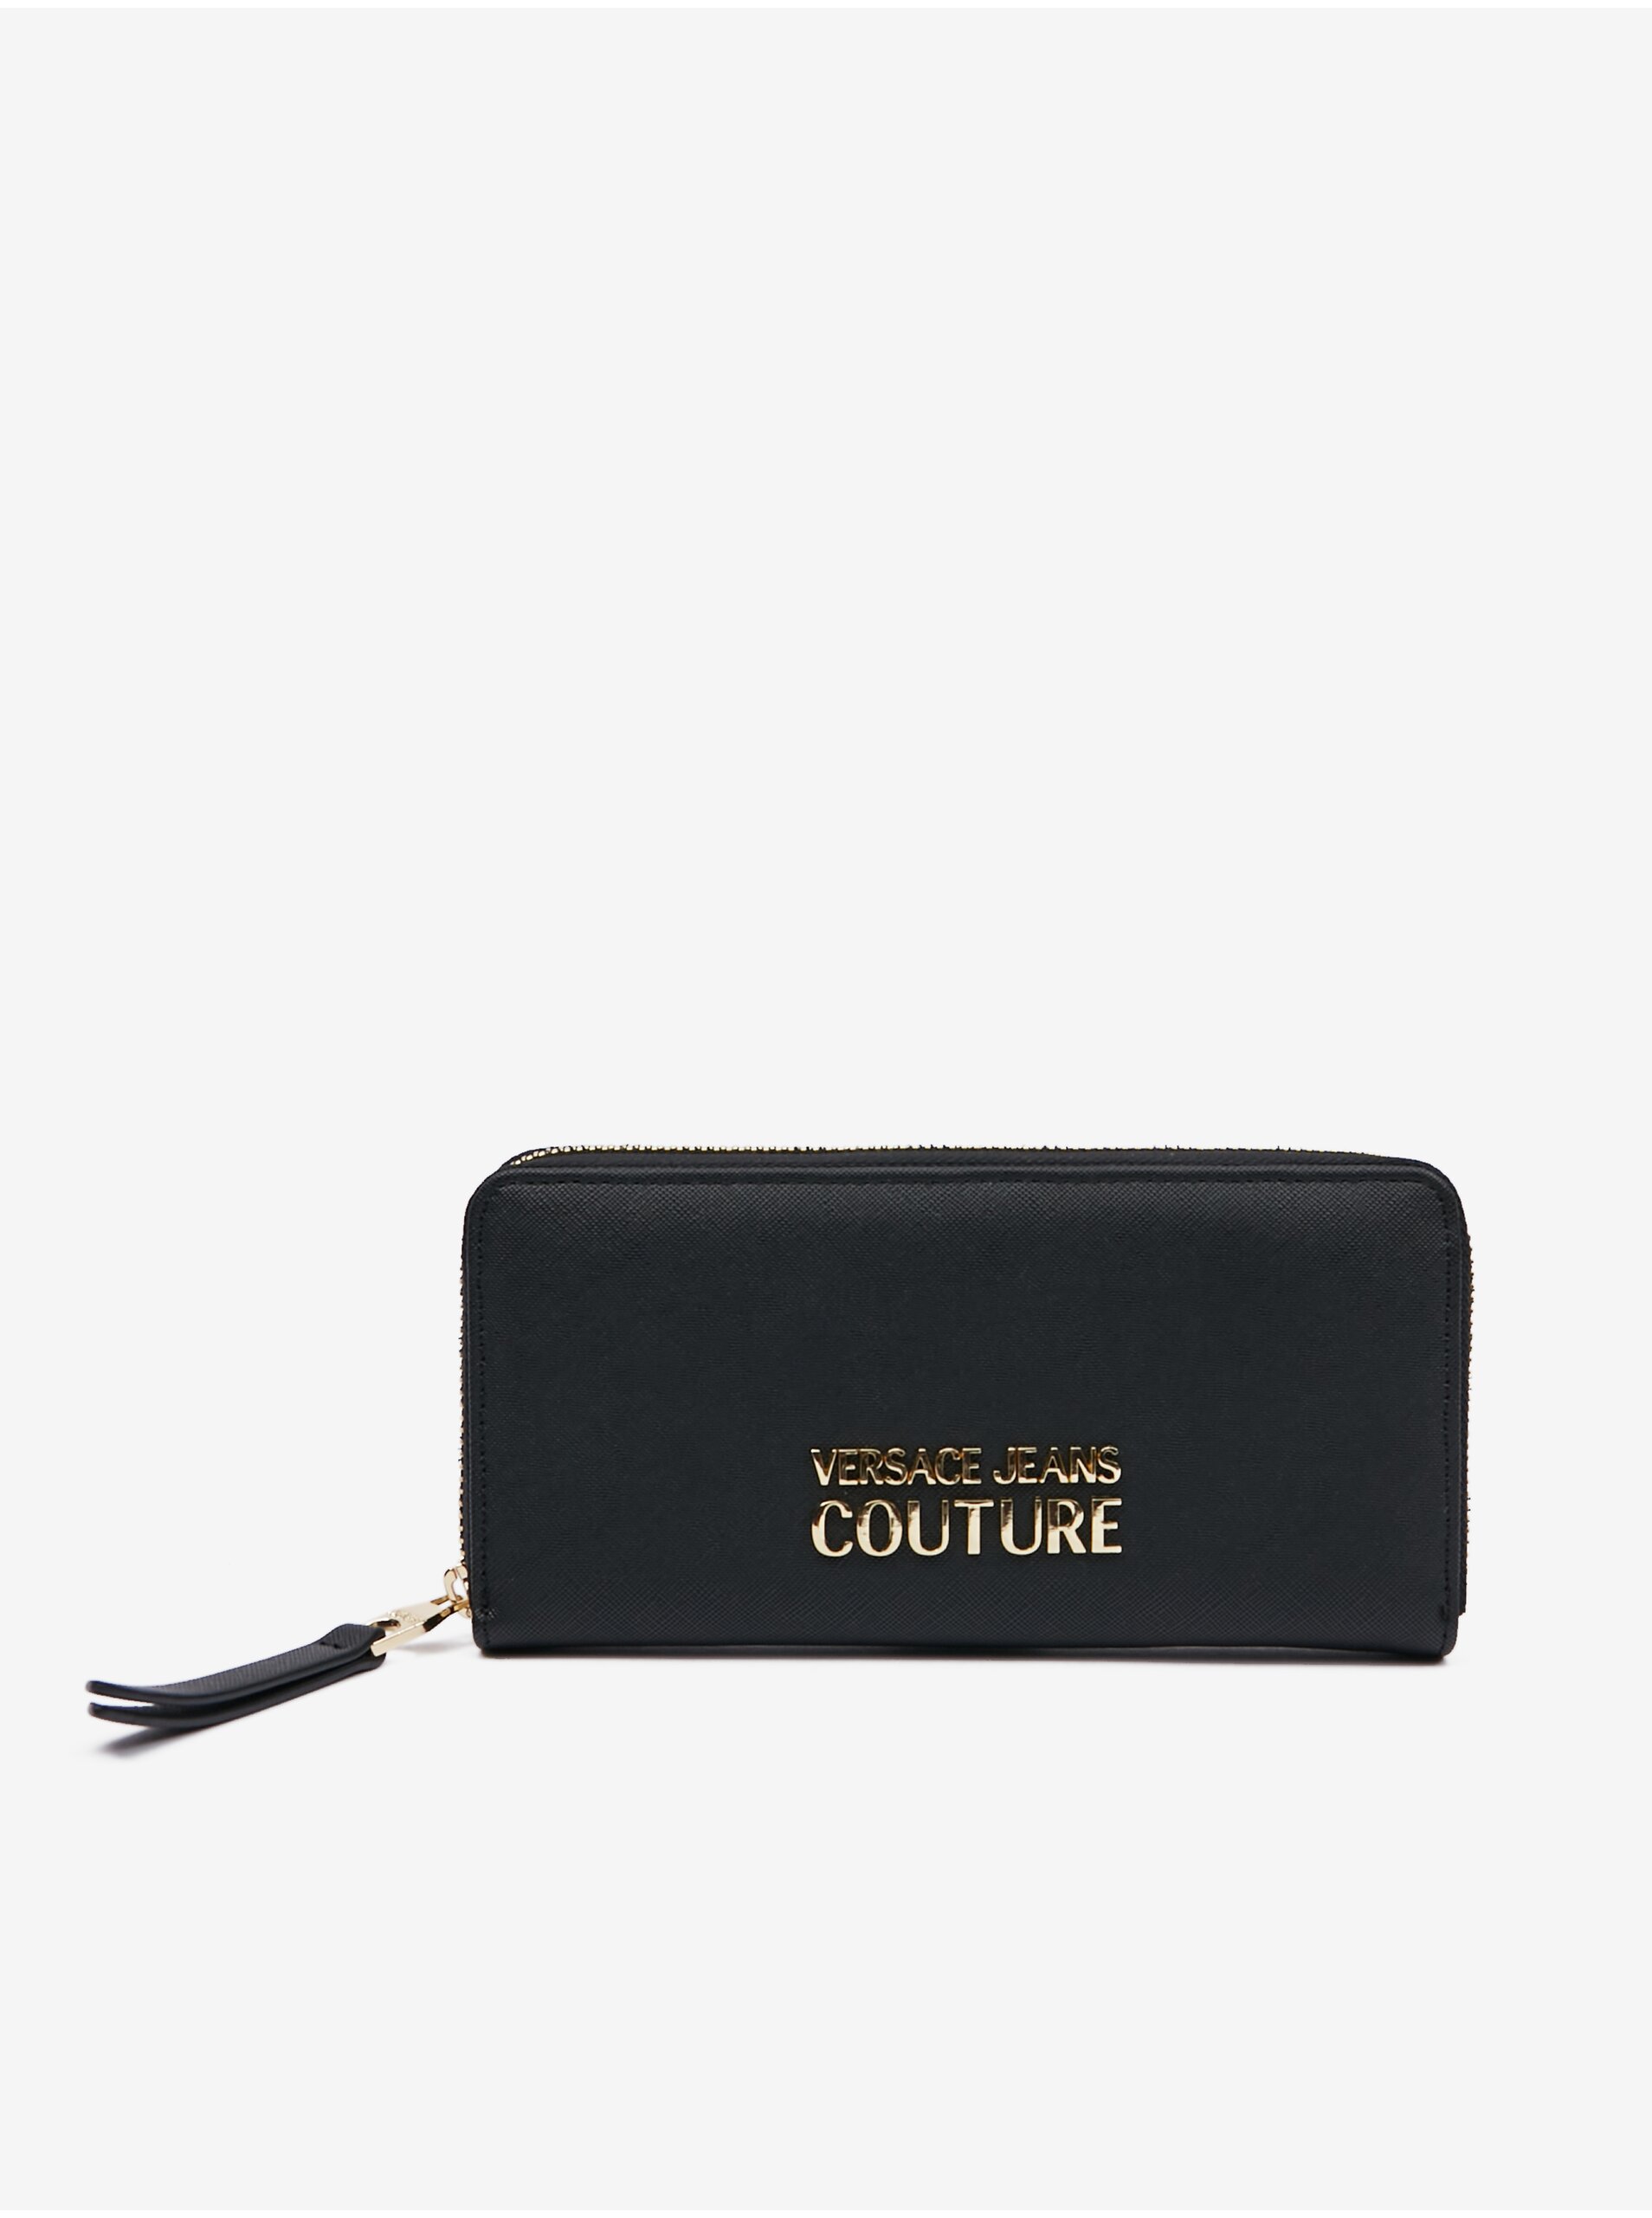 Versace Jeans Couture Range A Thelma Black Women's Wallet